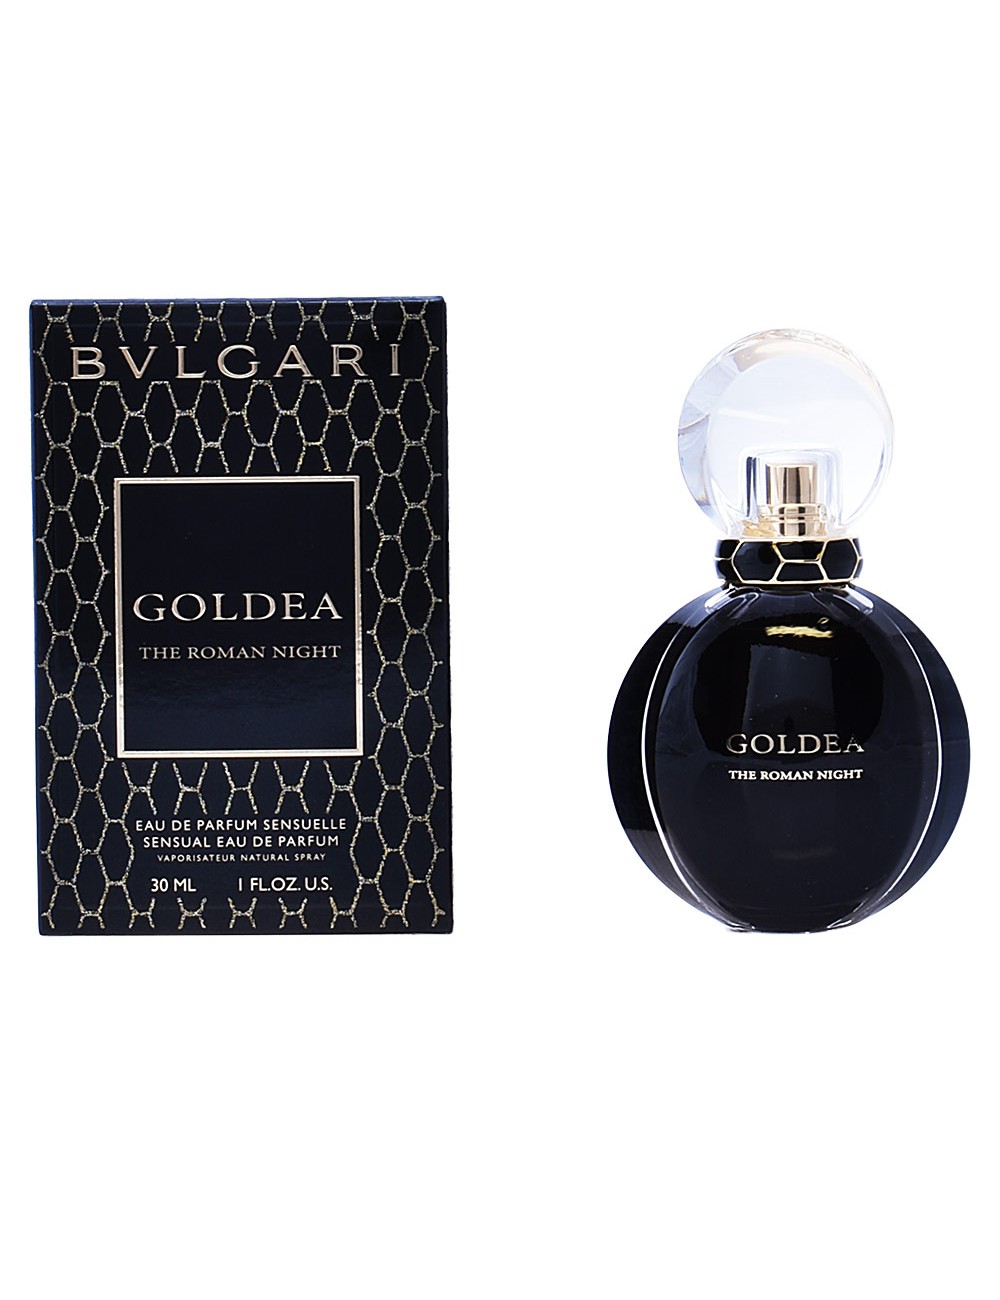 GOLDEA THE ROMAN NIGHT eau de parfum sensuelle 30 ml NE92800